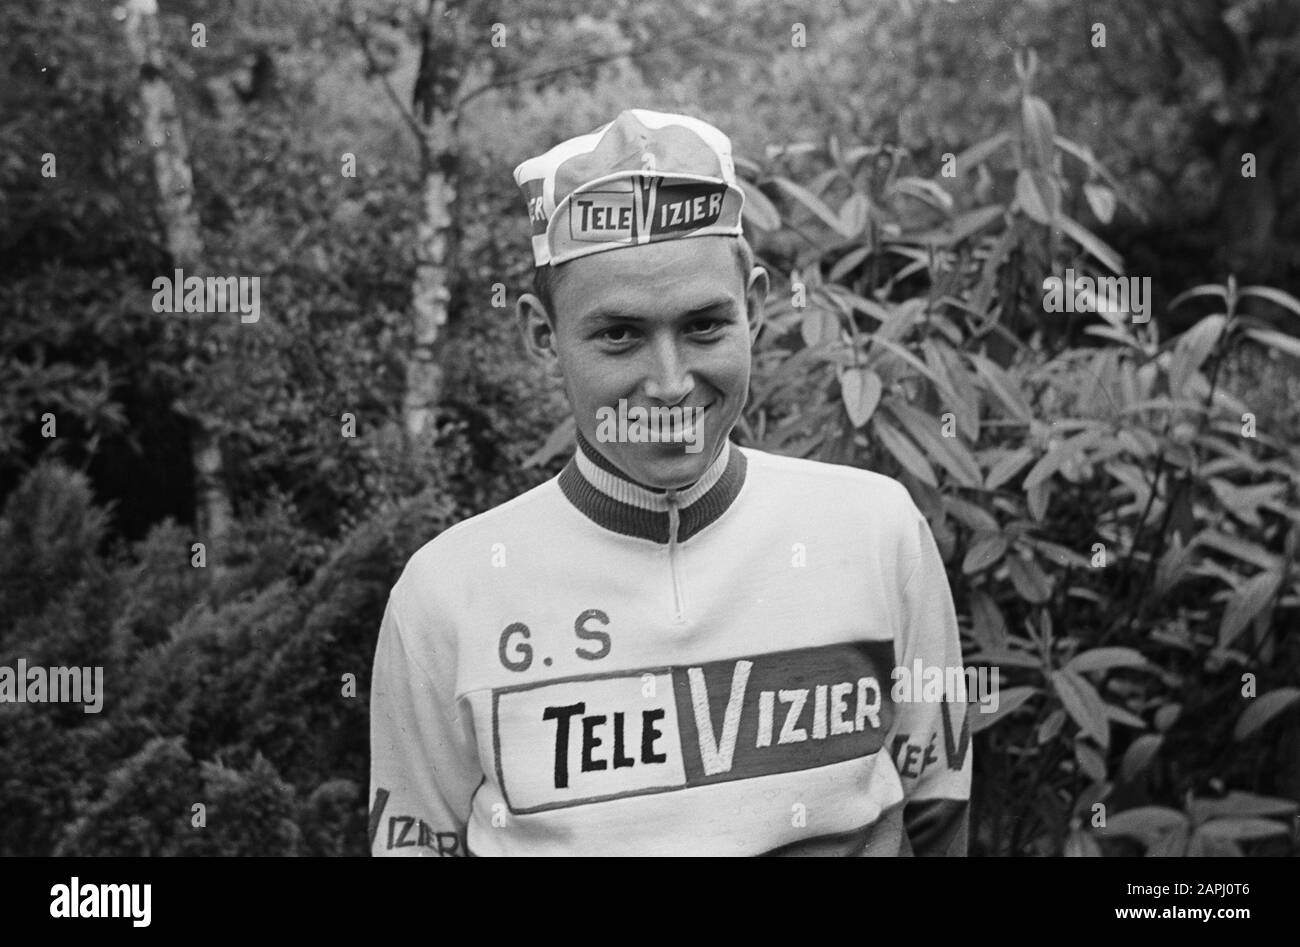 De Televizierteam nr. 19, 20 Gerben Karstens, nr. 21, Huub Harings Date:  June 16, 1965 Keywords: cyclists Personal name: Gerben Karstens Stock Photo  - Alamy